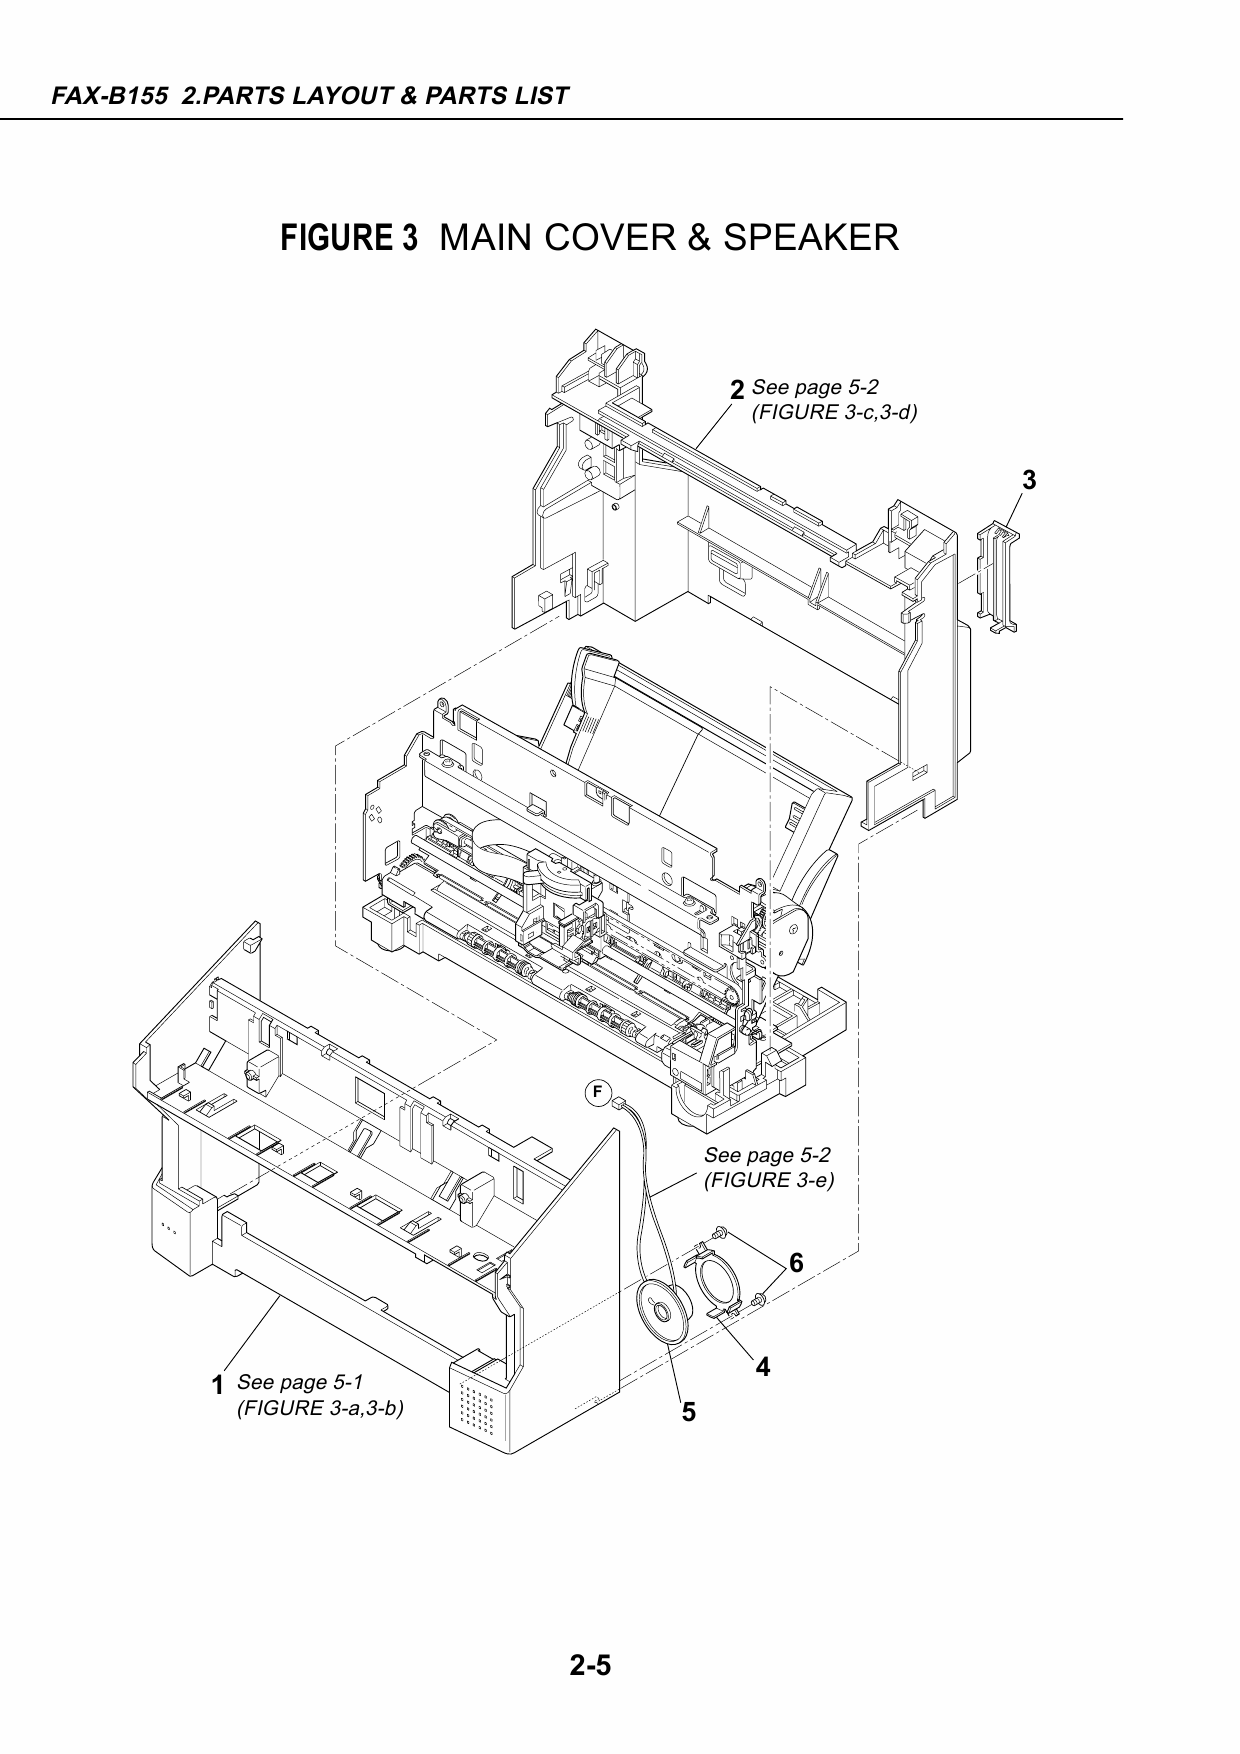 Canon FAX B155 Parts Catalog Manual-3